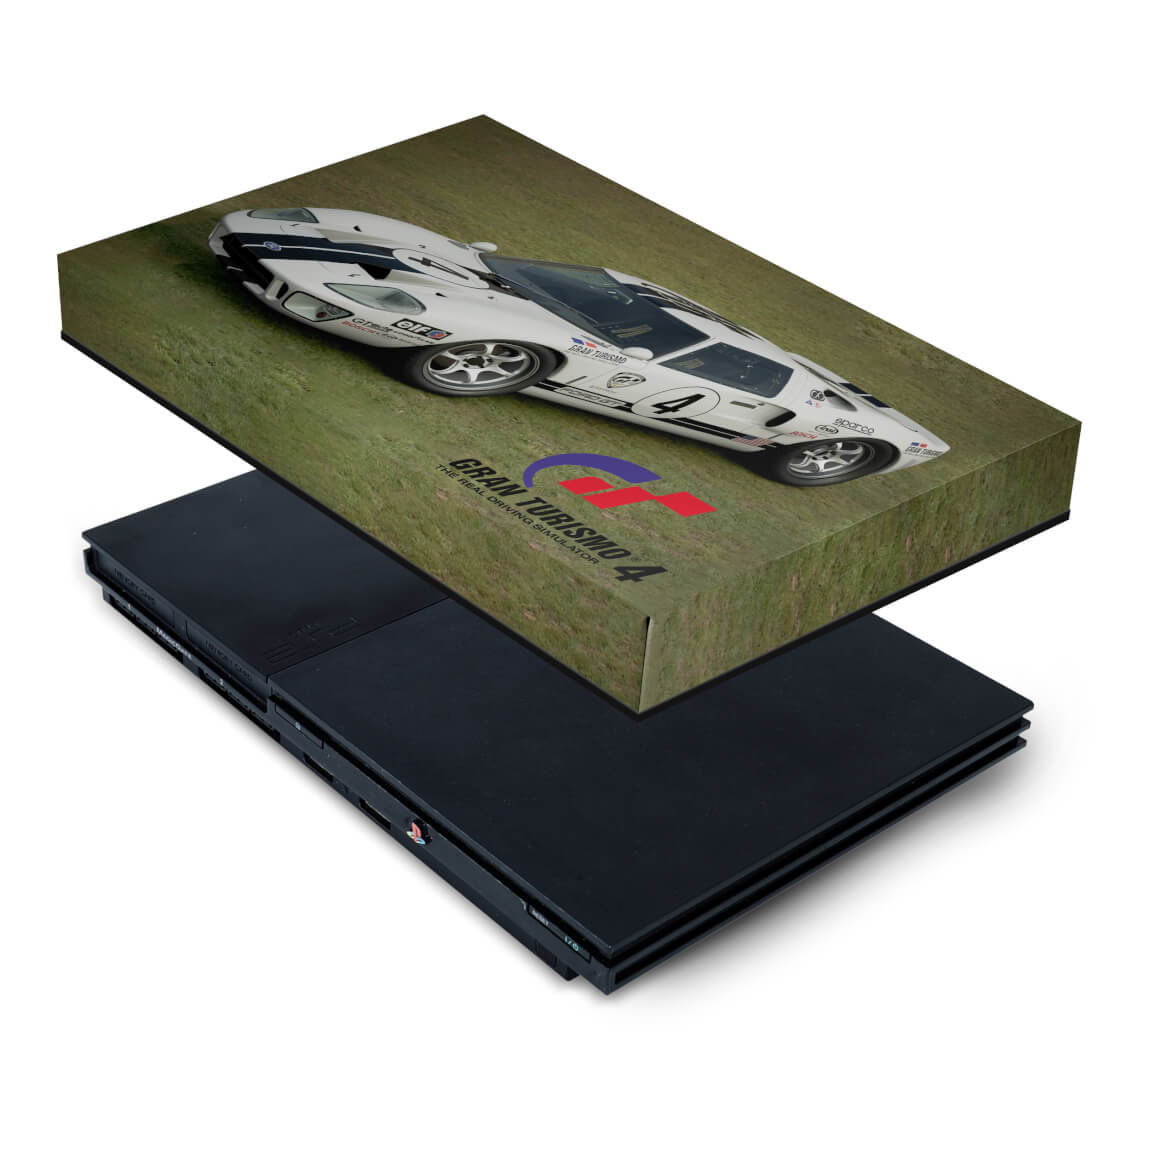 Playstation 2 Slim Edição Gran Turismo 4 Sony Ps2